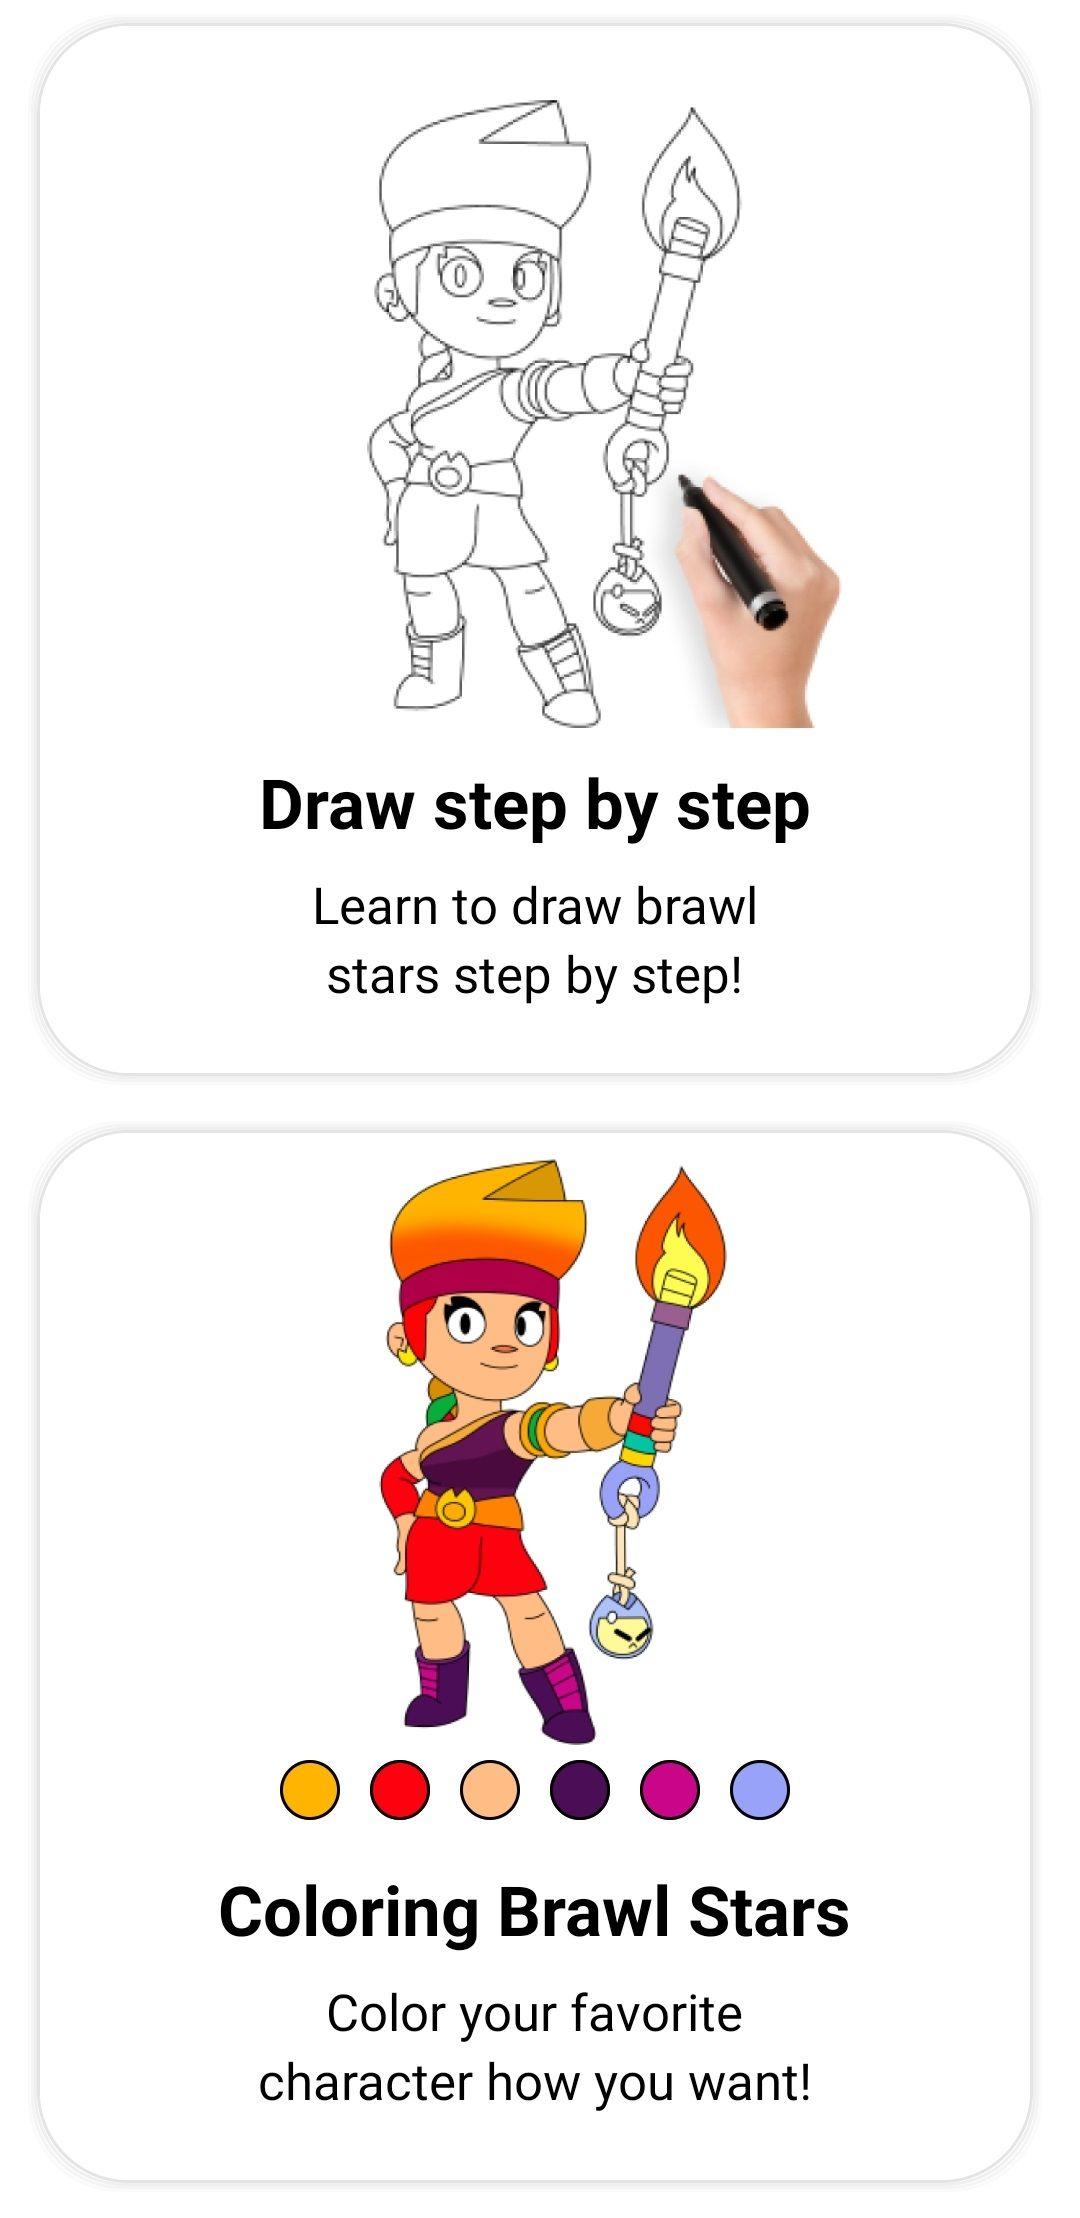 Coloring Brawl Stars How To Draw Brawl Stars For Android Apk Download - how to draw brawl stars epc